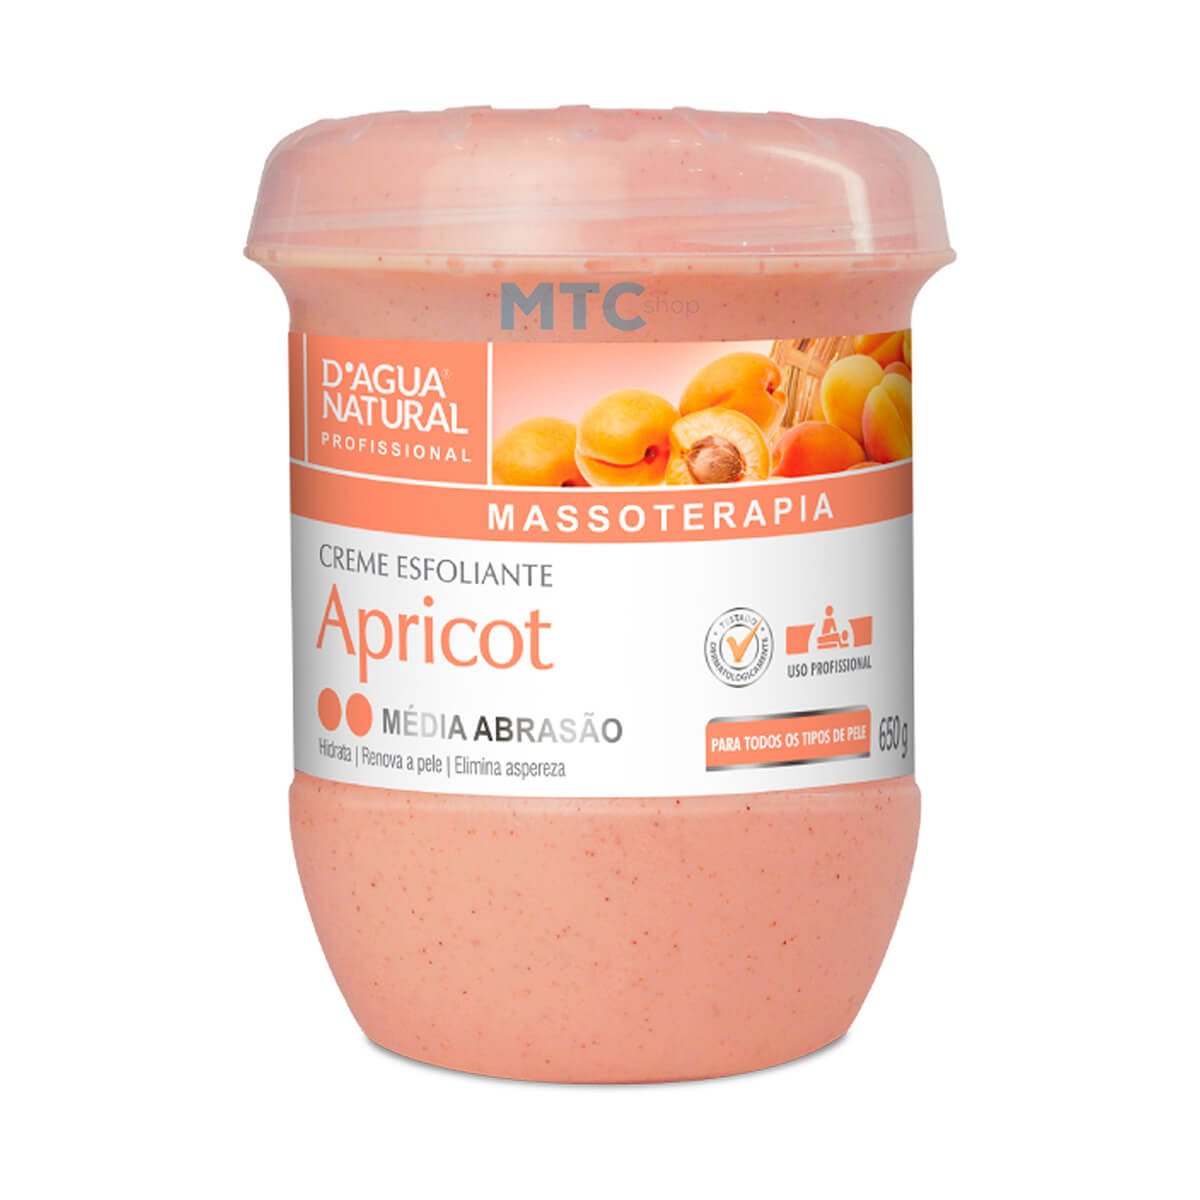 Creme Esfoliante Apricot Média Abrasão - 650g - D'Agua Natural